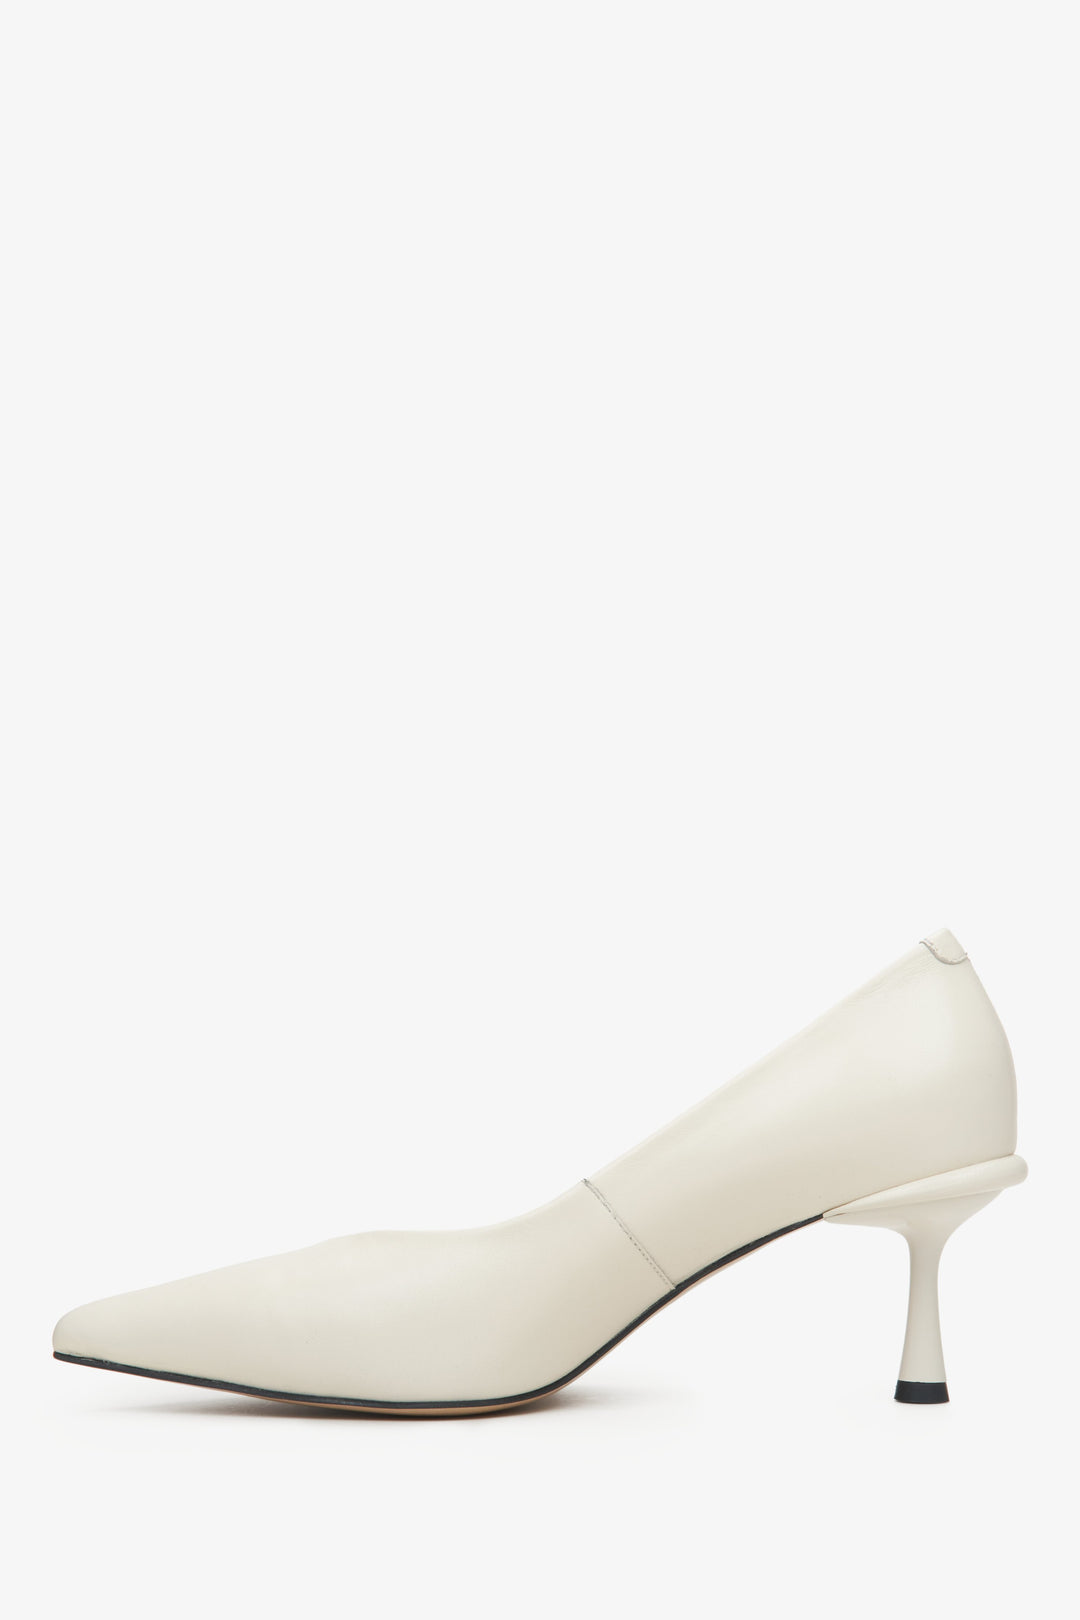 Women's milk-white leather pumps by Estro - shoe profile.